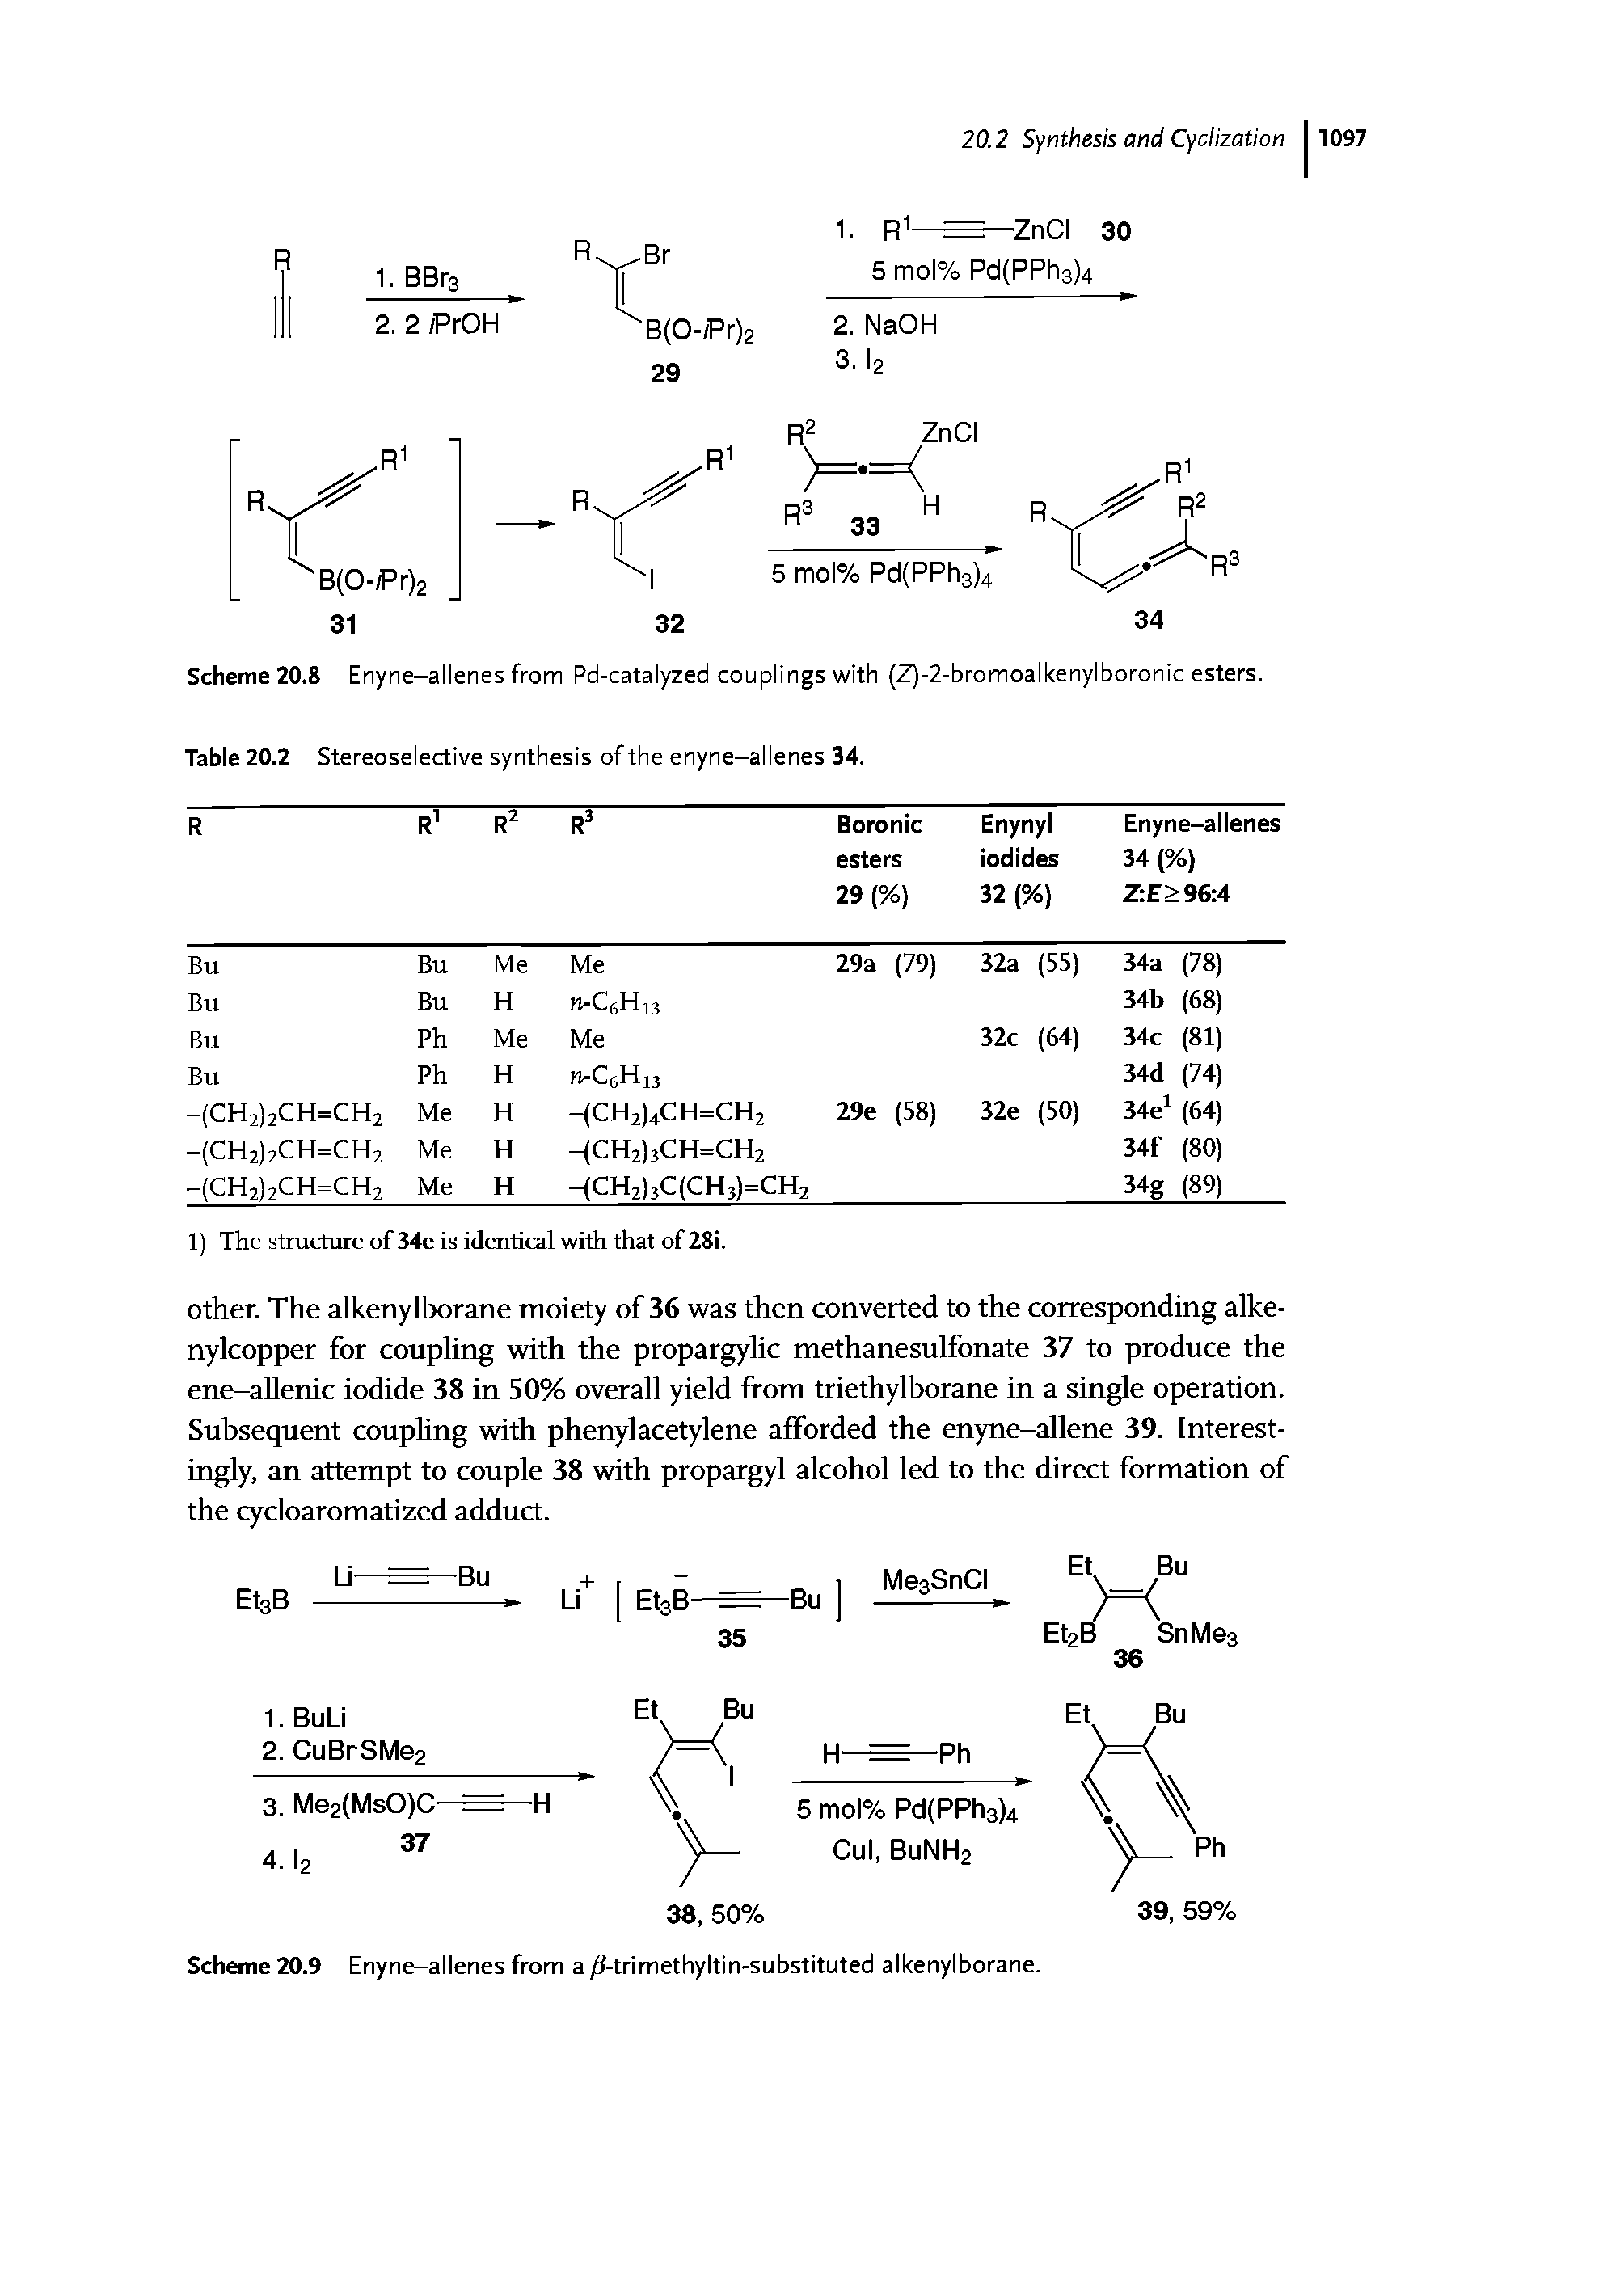 Scheme 20.9 Enyne-allenes from a /i-trimethyltin-substituted alkenylborane.